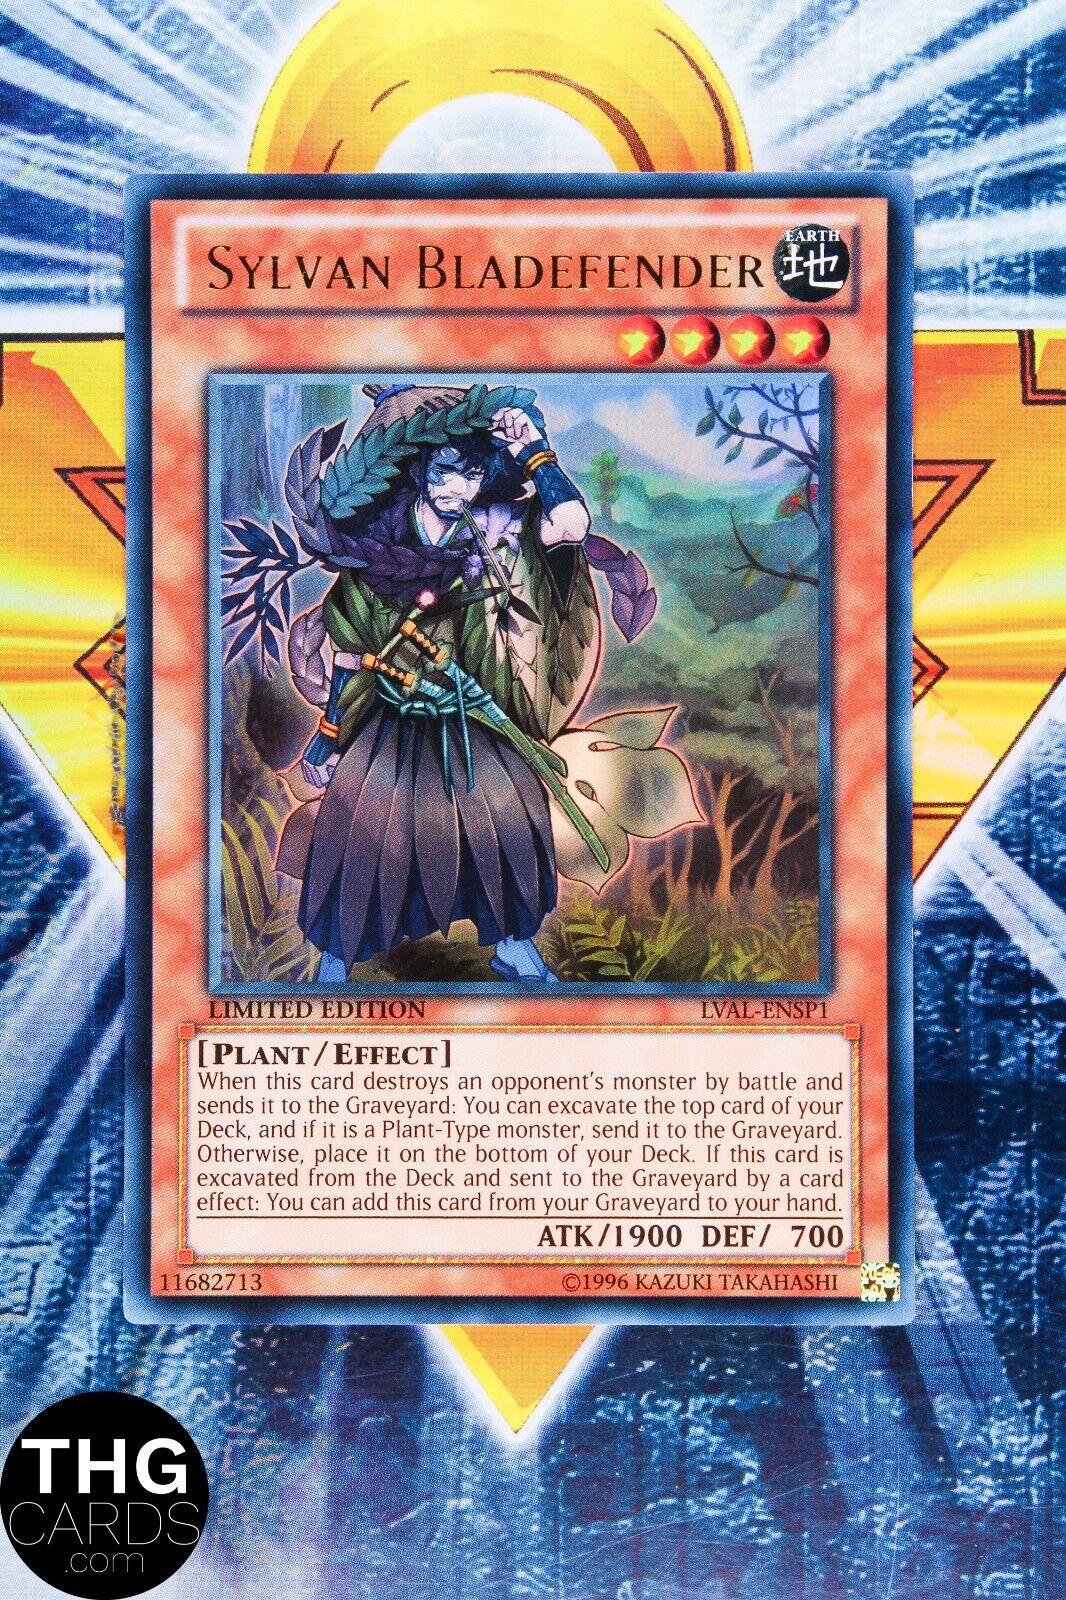 Sylvan Bladefender LVAL-ENSP1 Limited Edition Ultra Rare Yugioh Card